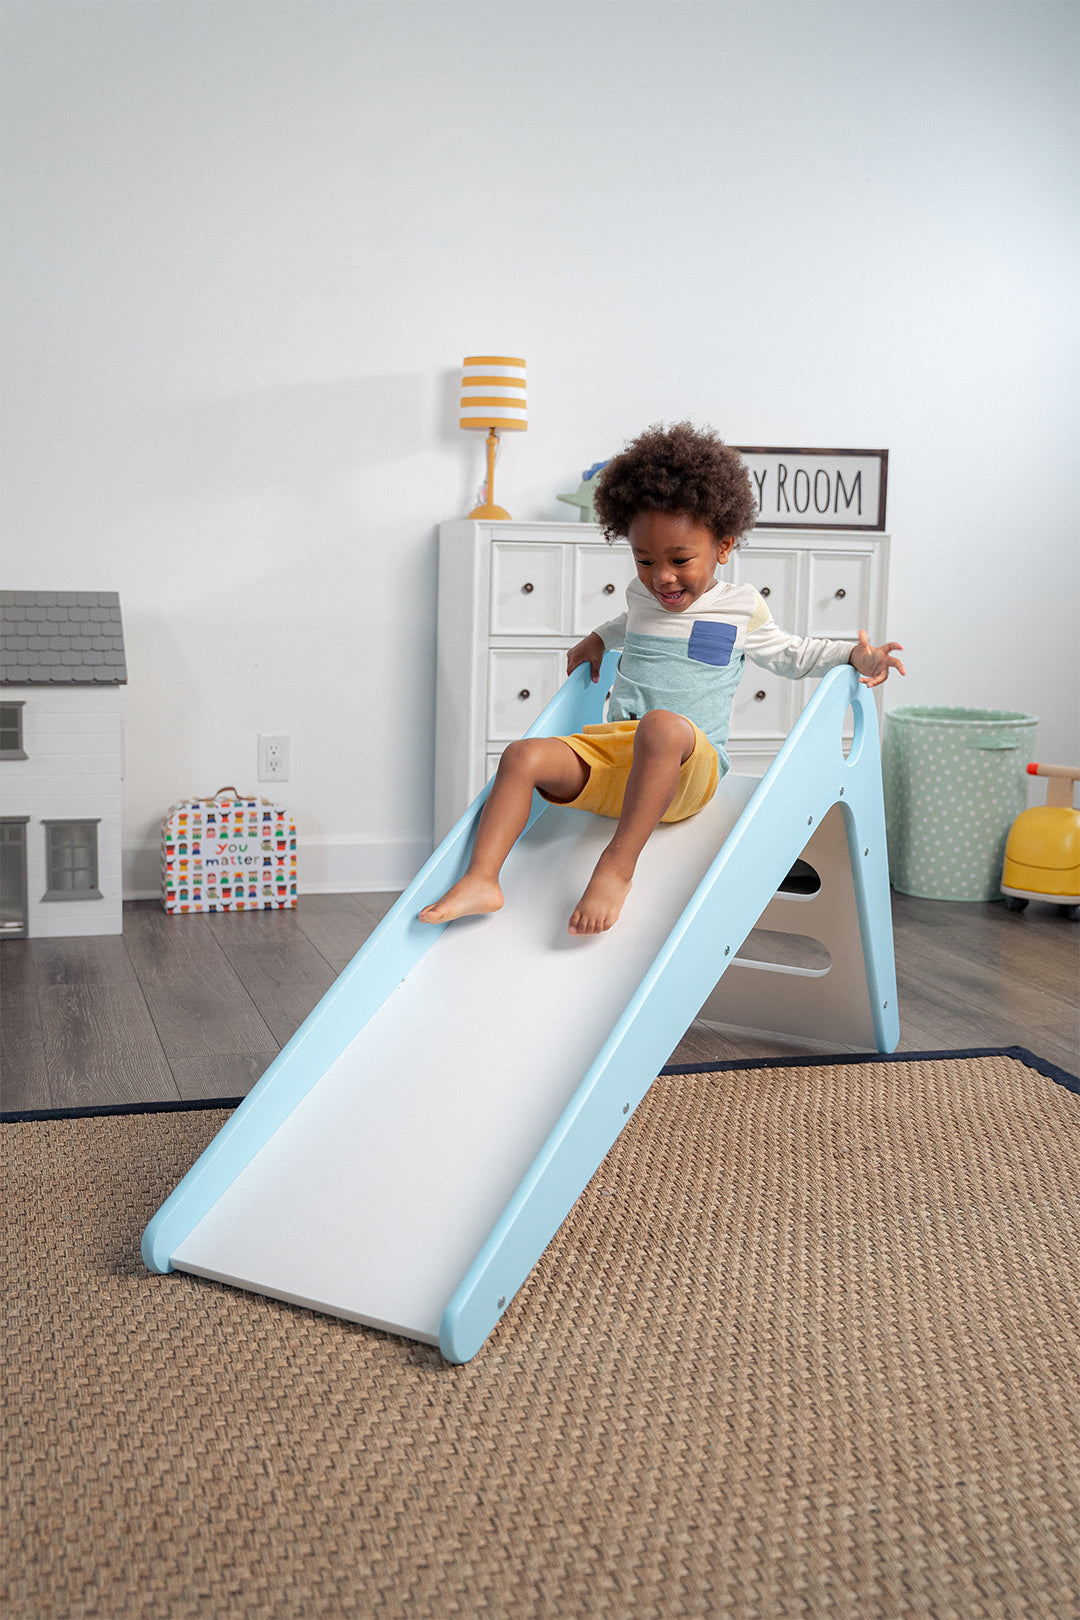 Toddler Sliding Down Manuka - Avenlur's Safe and Fun Indoor Toddler Slide in Playroom. Shown in Blue.